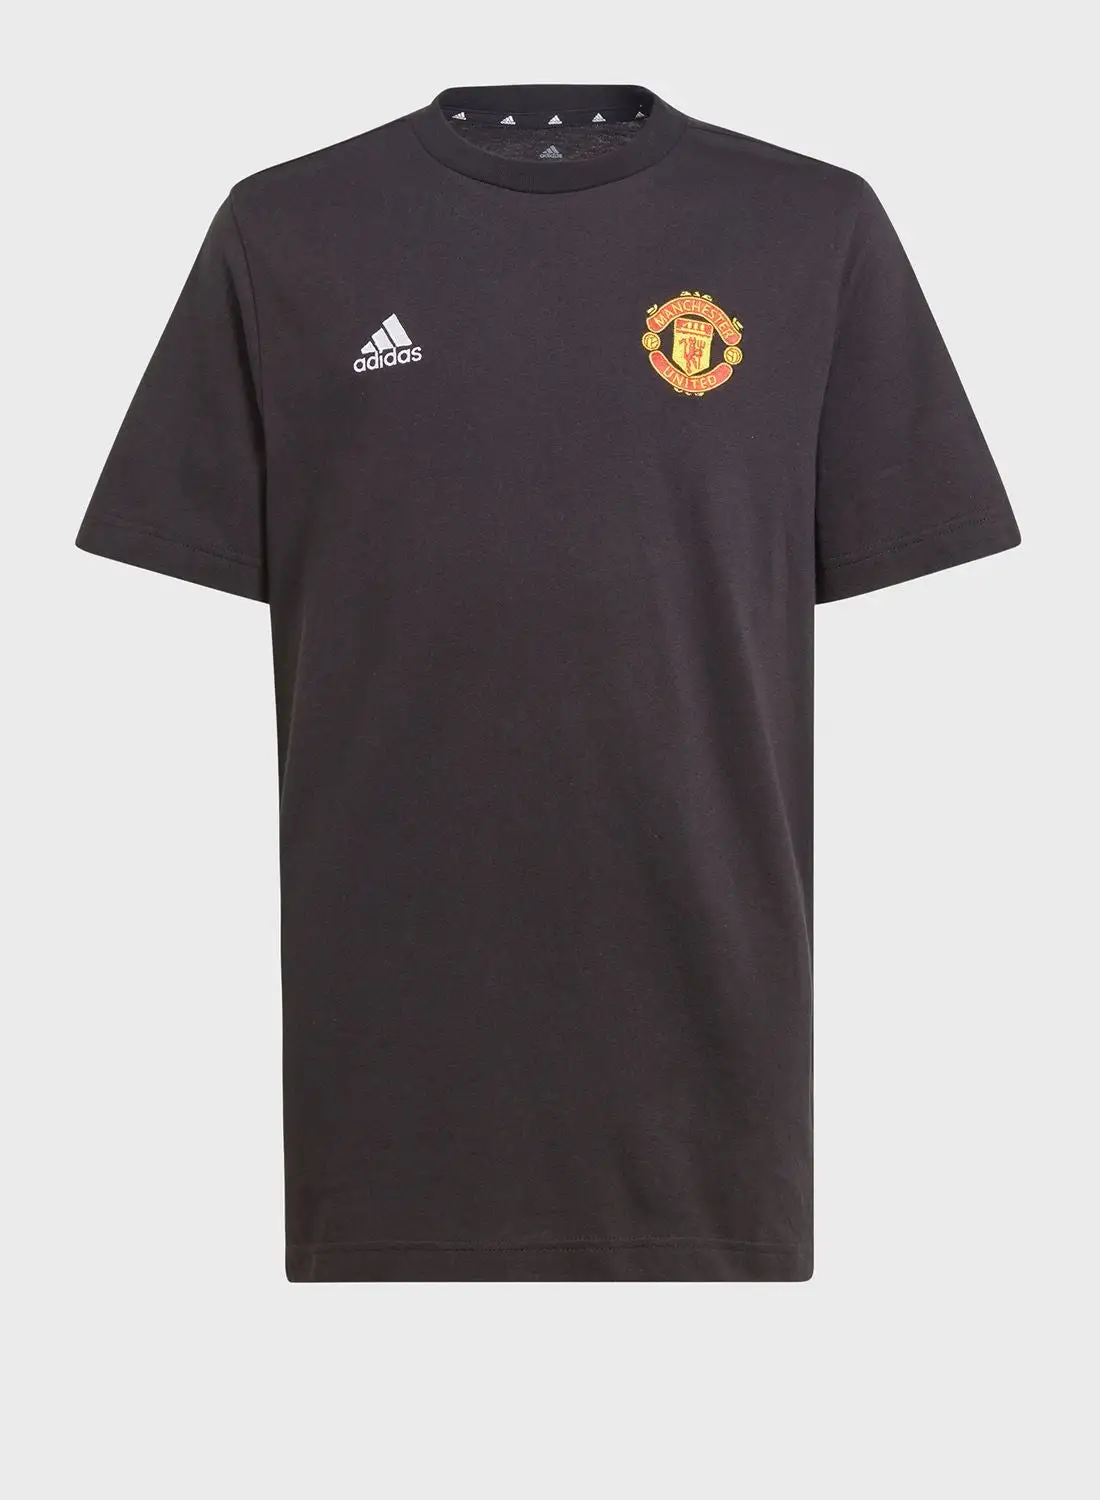 Adidas Kids Manchester United T-Shirt